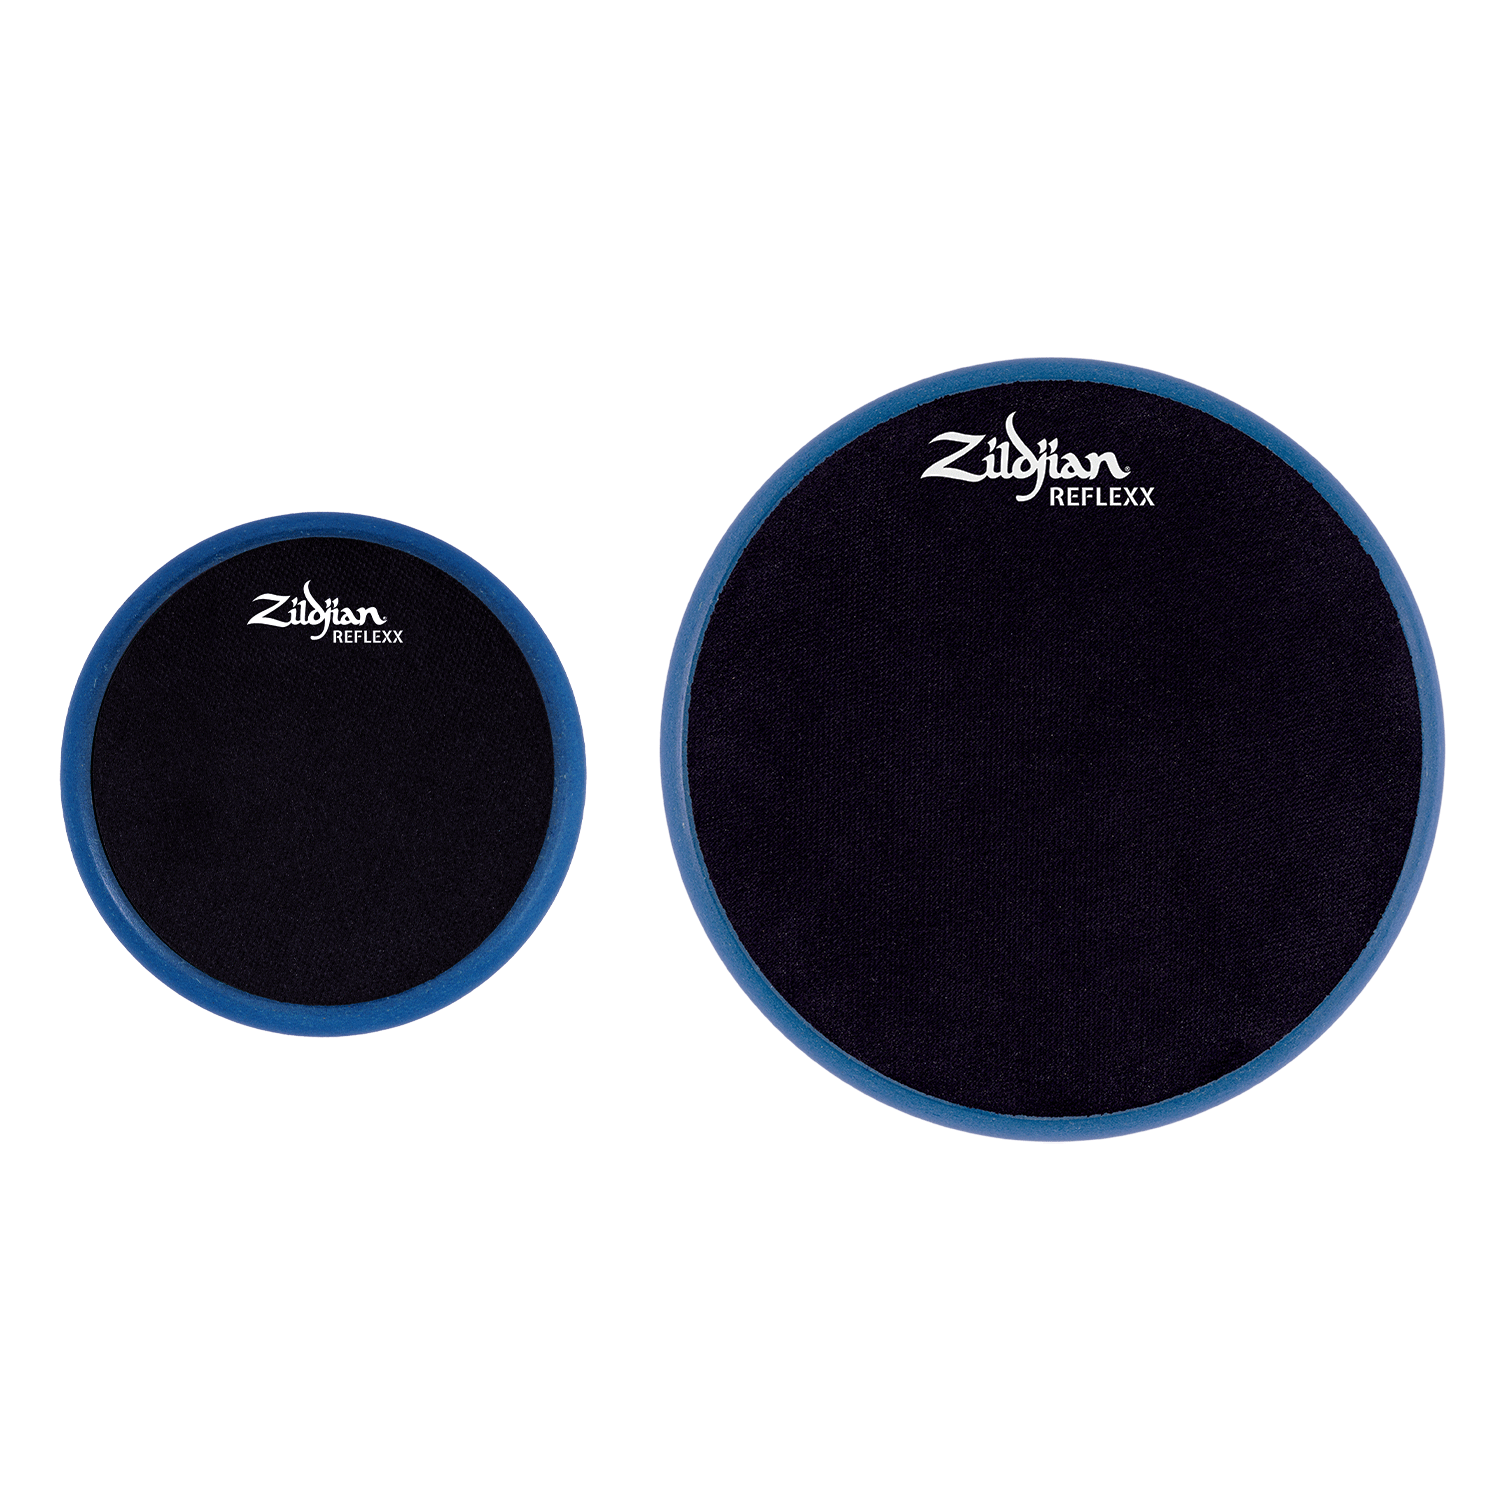 Zildjian Reflexx Conditioning Pad - Blue